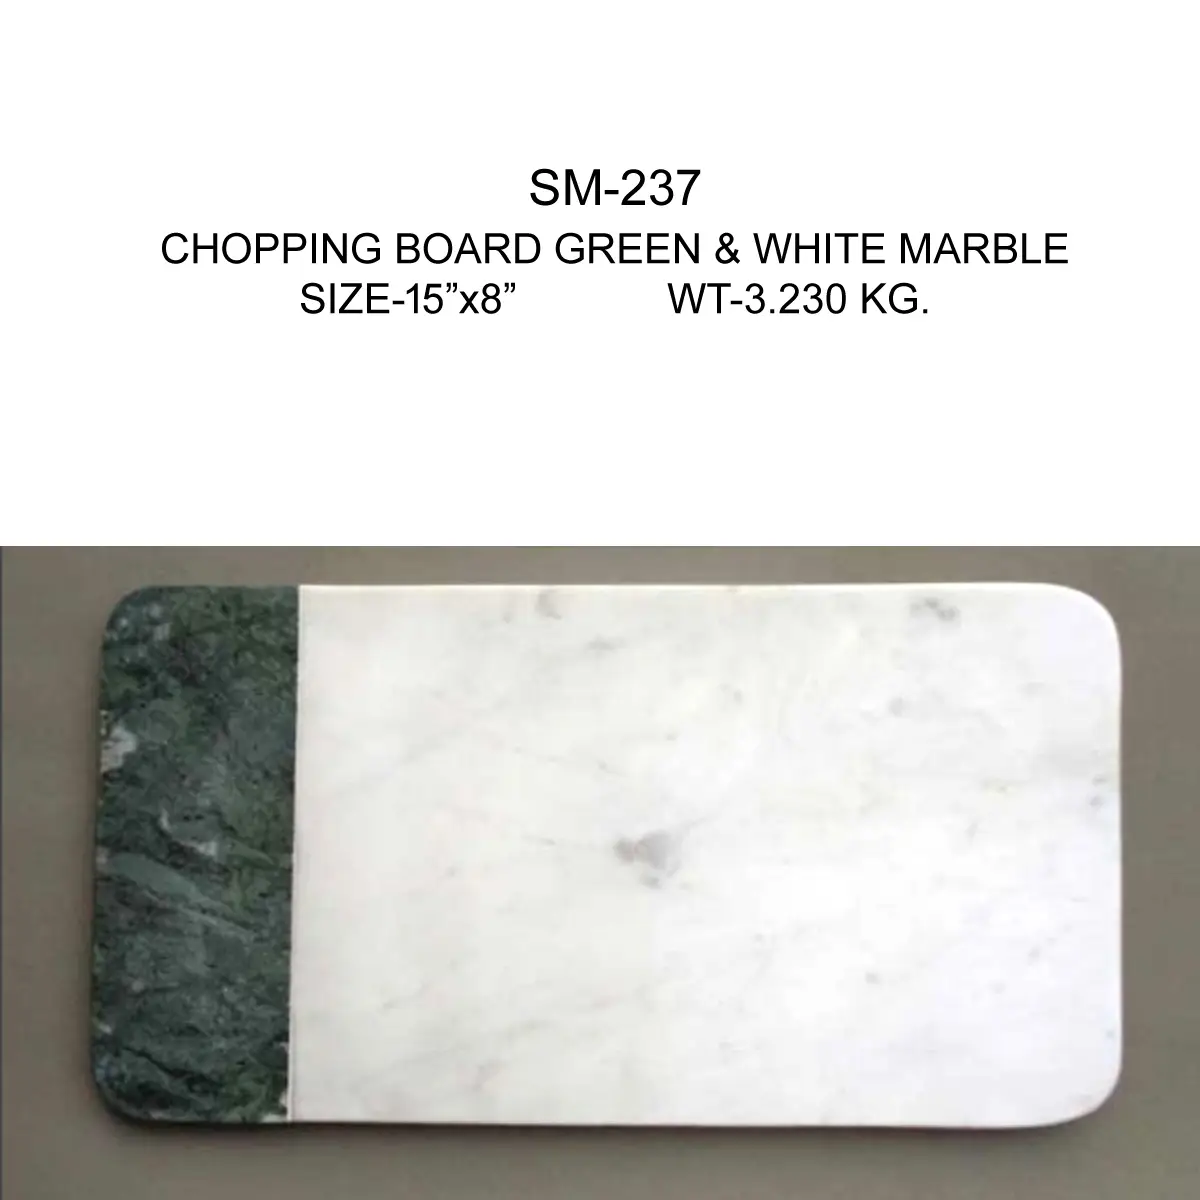 CHOPPING BOARD GREEN
& WHITE MARBLE